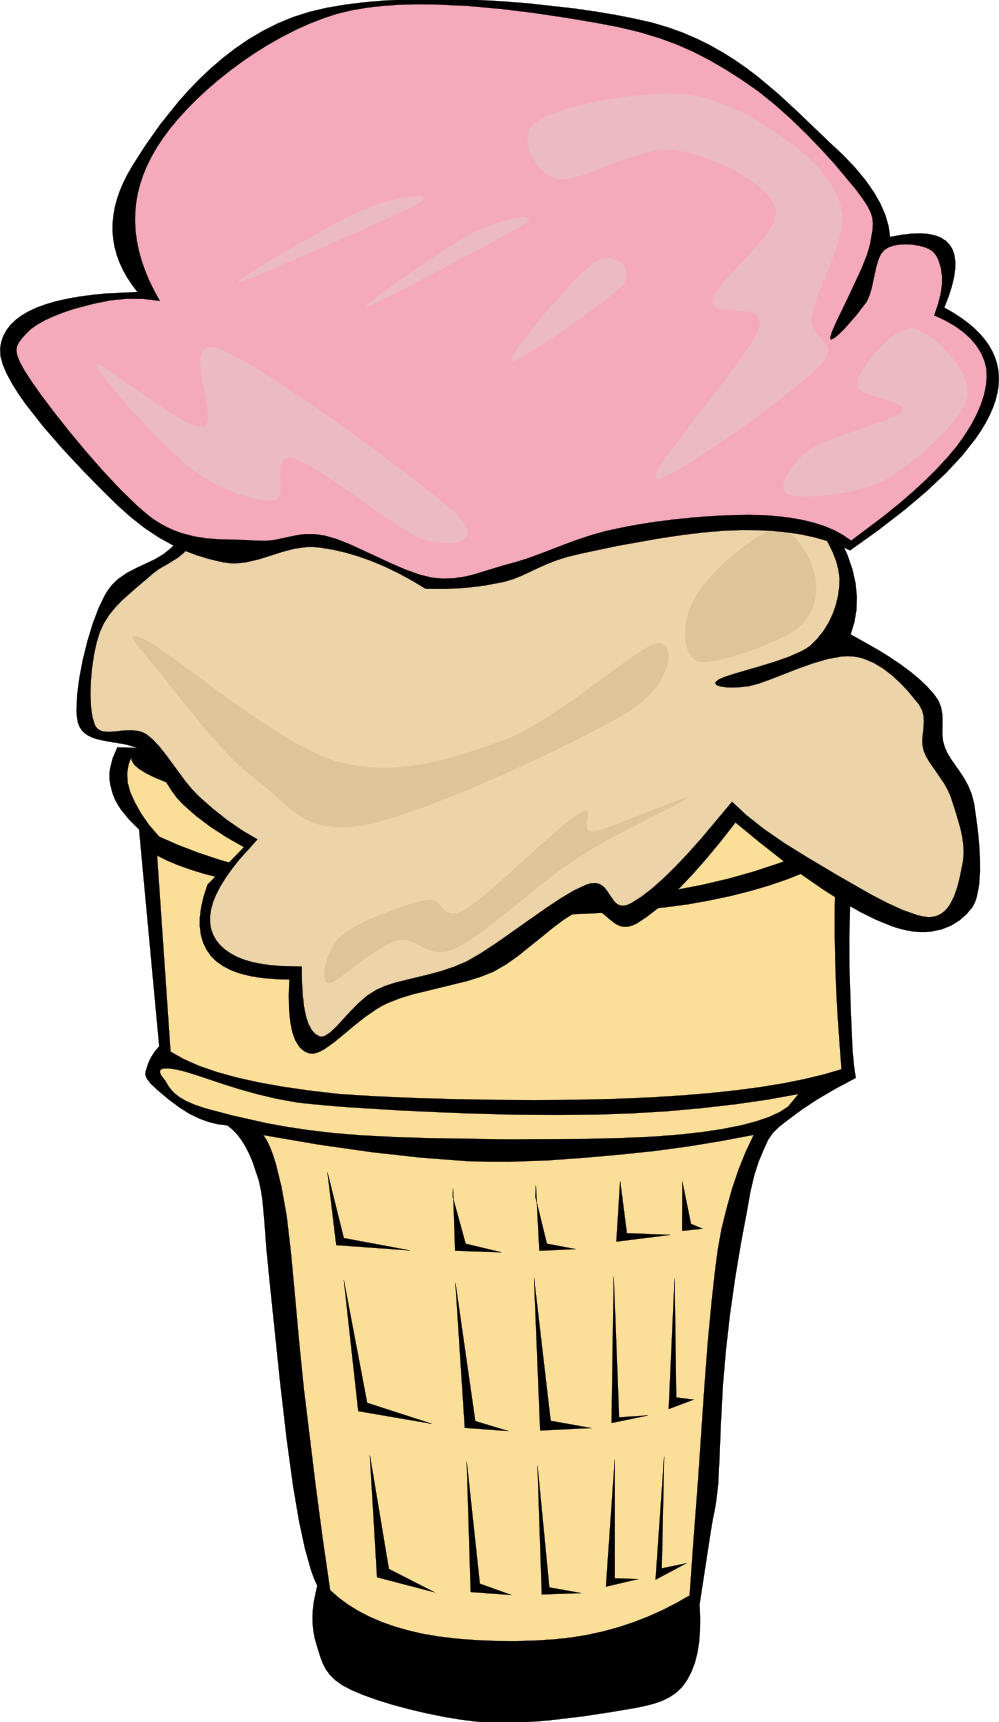 Ice Cream Cone Clip Art - Clipartion.com